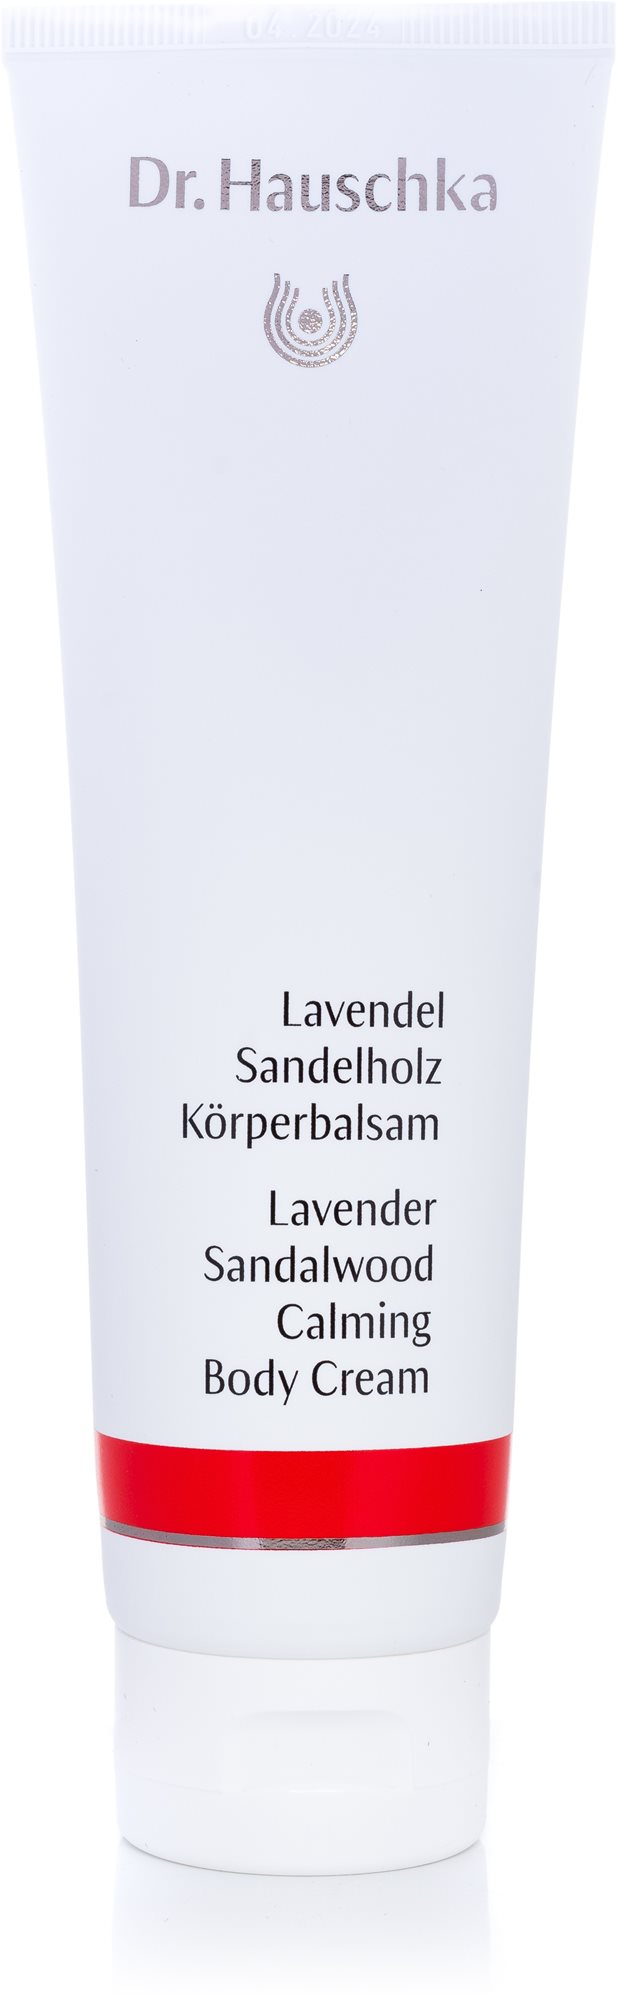 DR. HAUSCHKA Lavander Sandalwood Calming Body Cream 145 ml